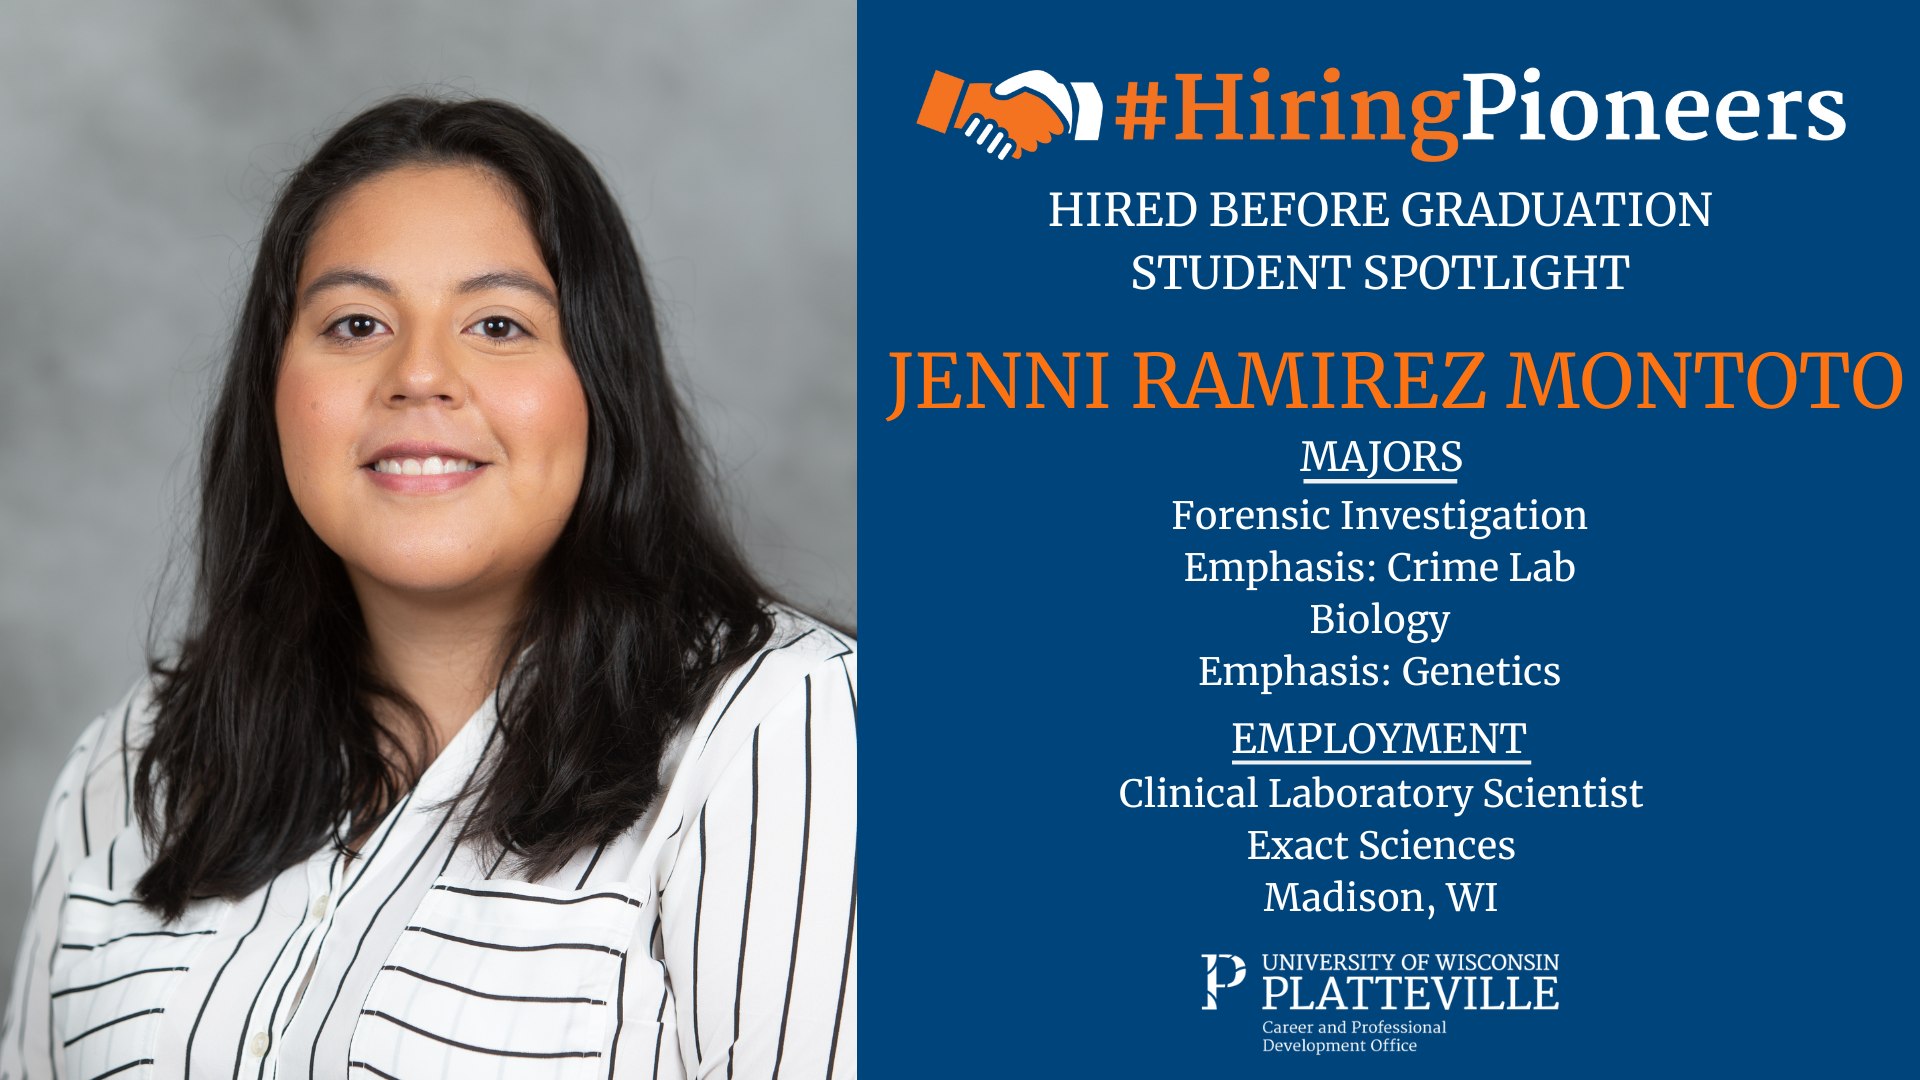 Jenni Ramirez Montoto, Hired Before Graduation